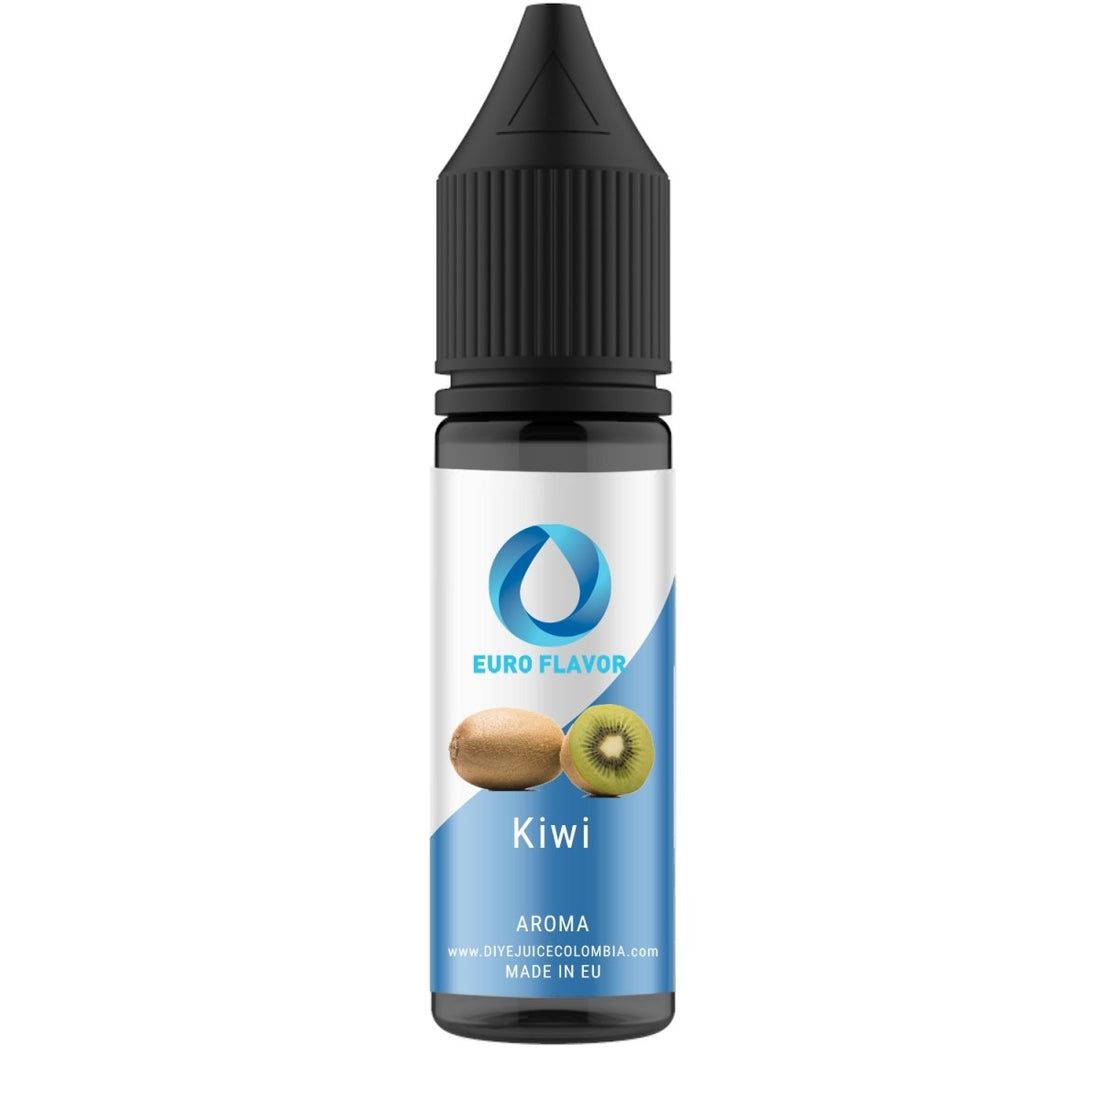 Kiwi EF - Aroma - Euro Flavor | AR-EF-KIW